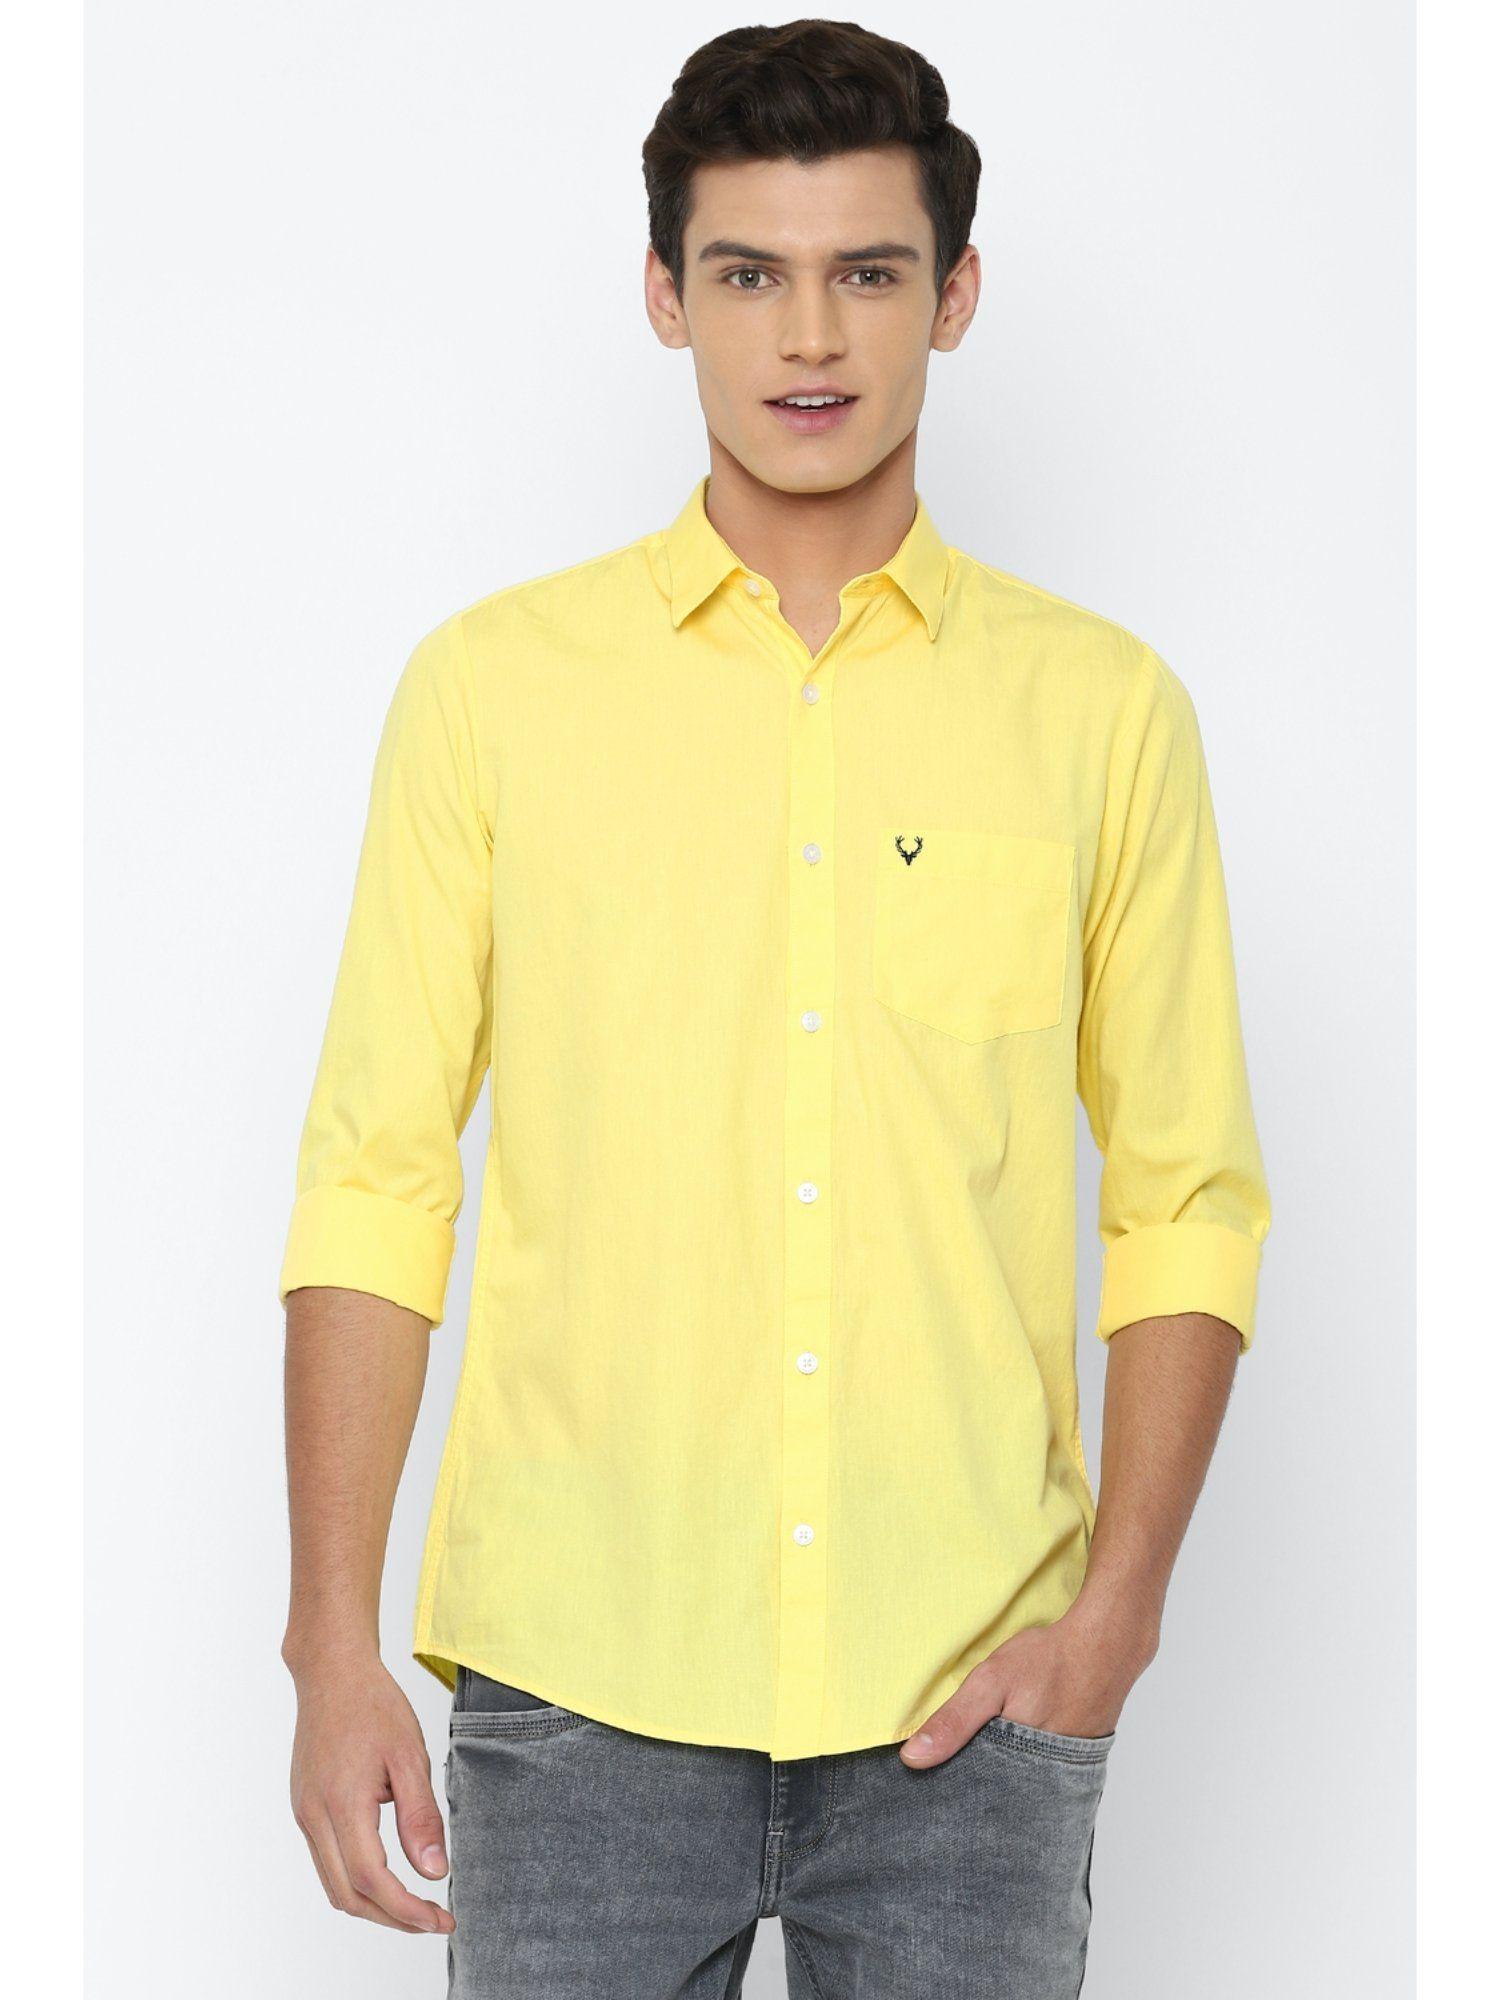 Men Yellow Slim Fit Solid Full Sleeves Casual Shirt